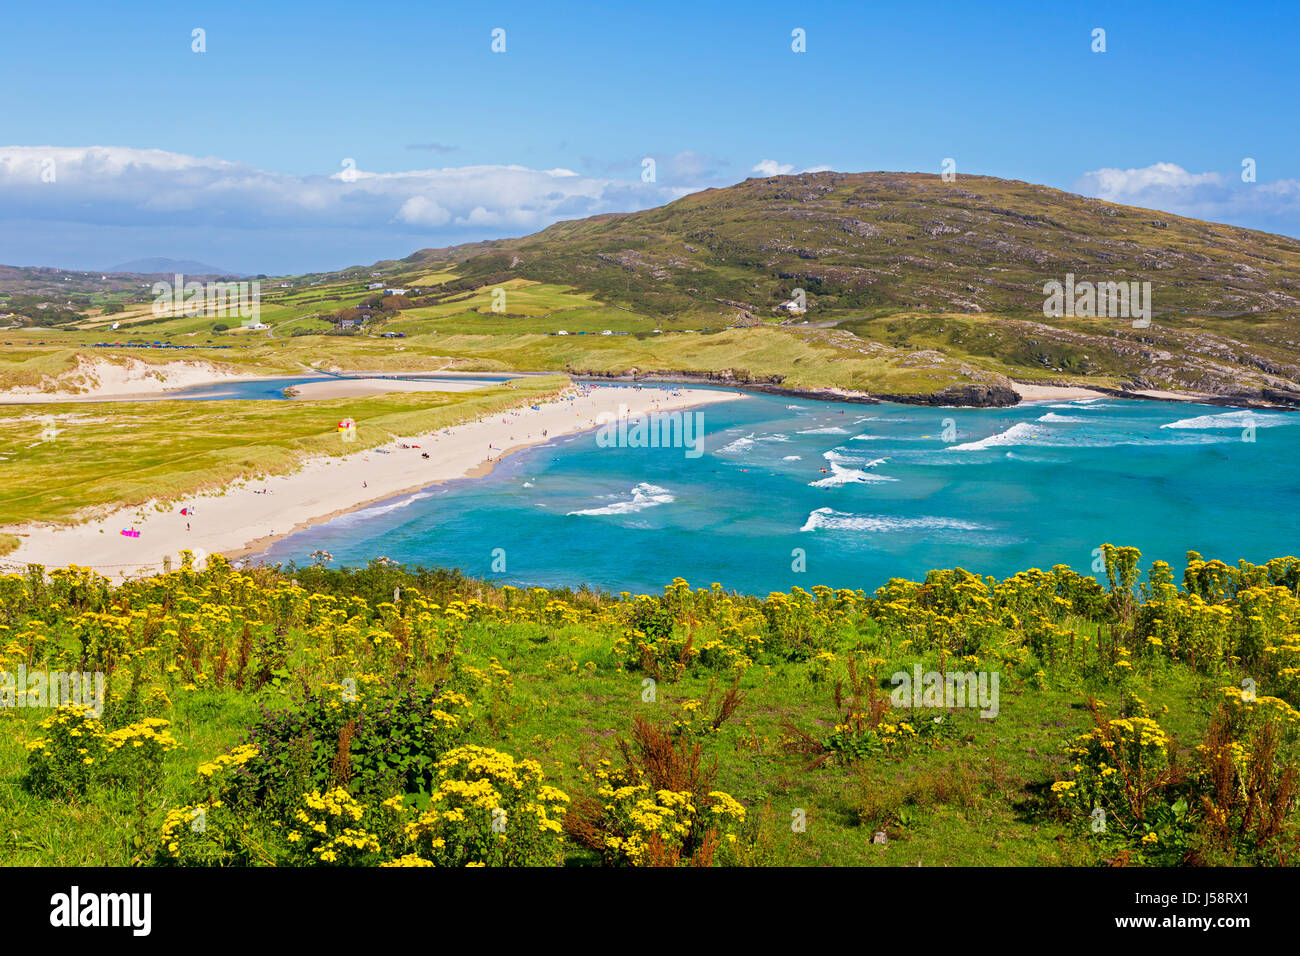 Barleycove beach, aka Barlycove beach, Wild Atlantic Coast, County Cork, Republic of Ireland.  Eire. Stock Photo